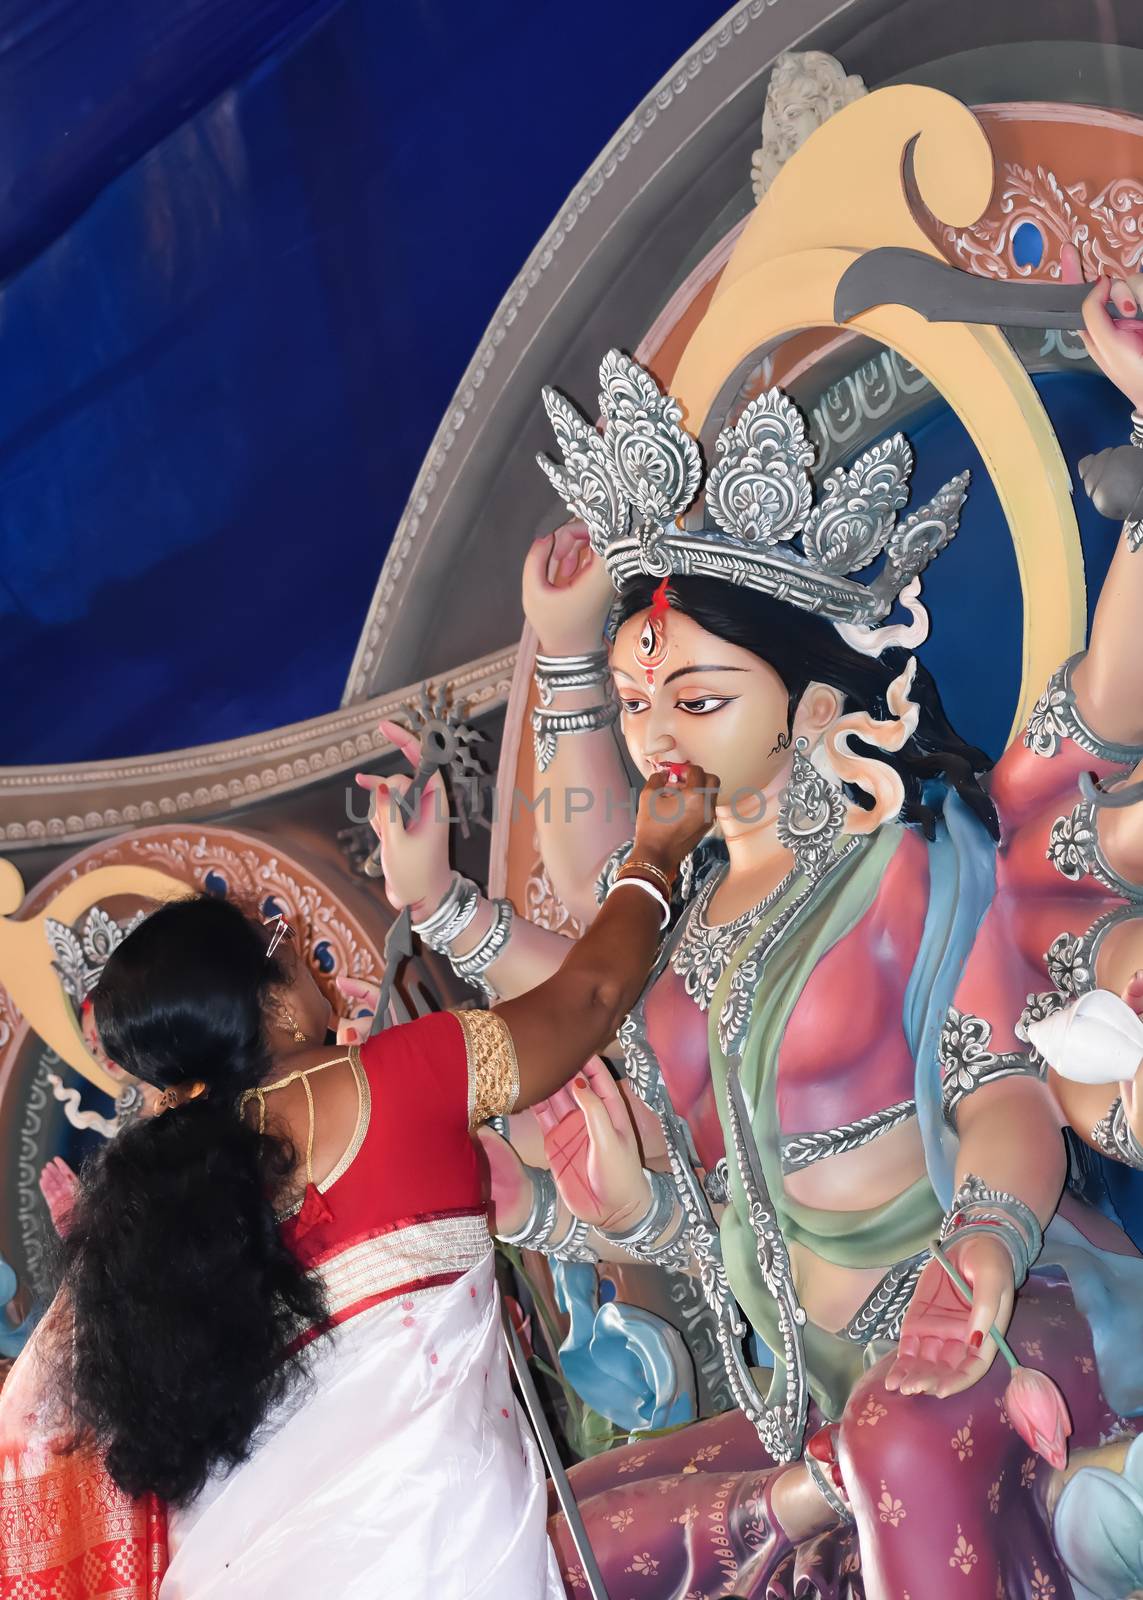 Kolkata October 2019 - Hindu devotee feeding sweets to Maa Durga and wish good luck for her journey back home at Vijaya Dashami in Durga puja Festival. A sorrowful ritual to bid farewell to the deity. by sudiptabhowmick